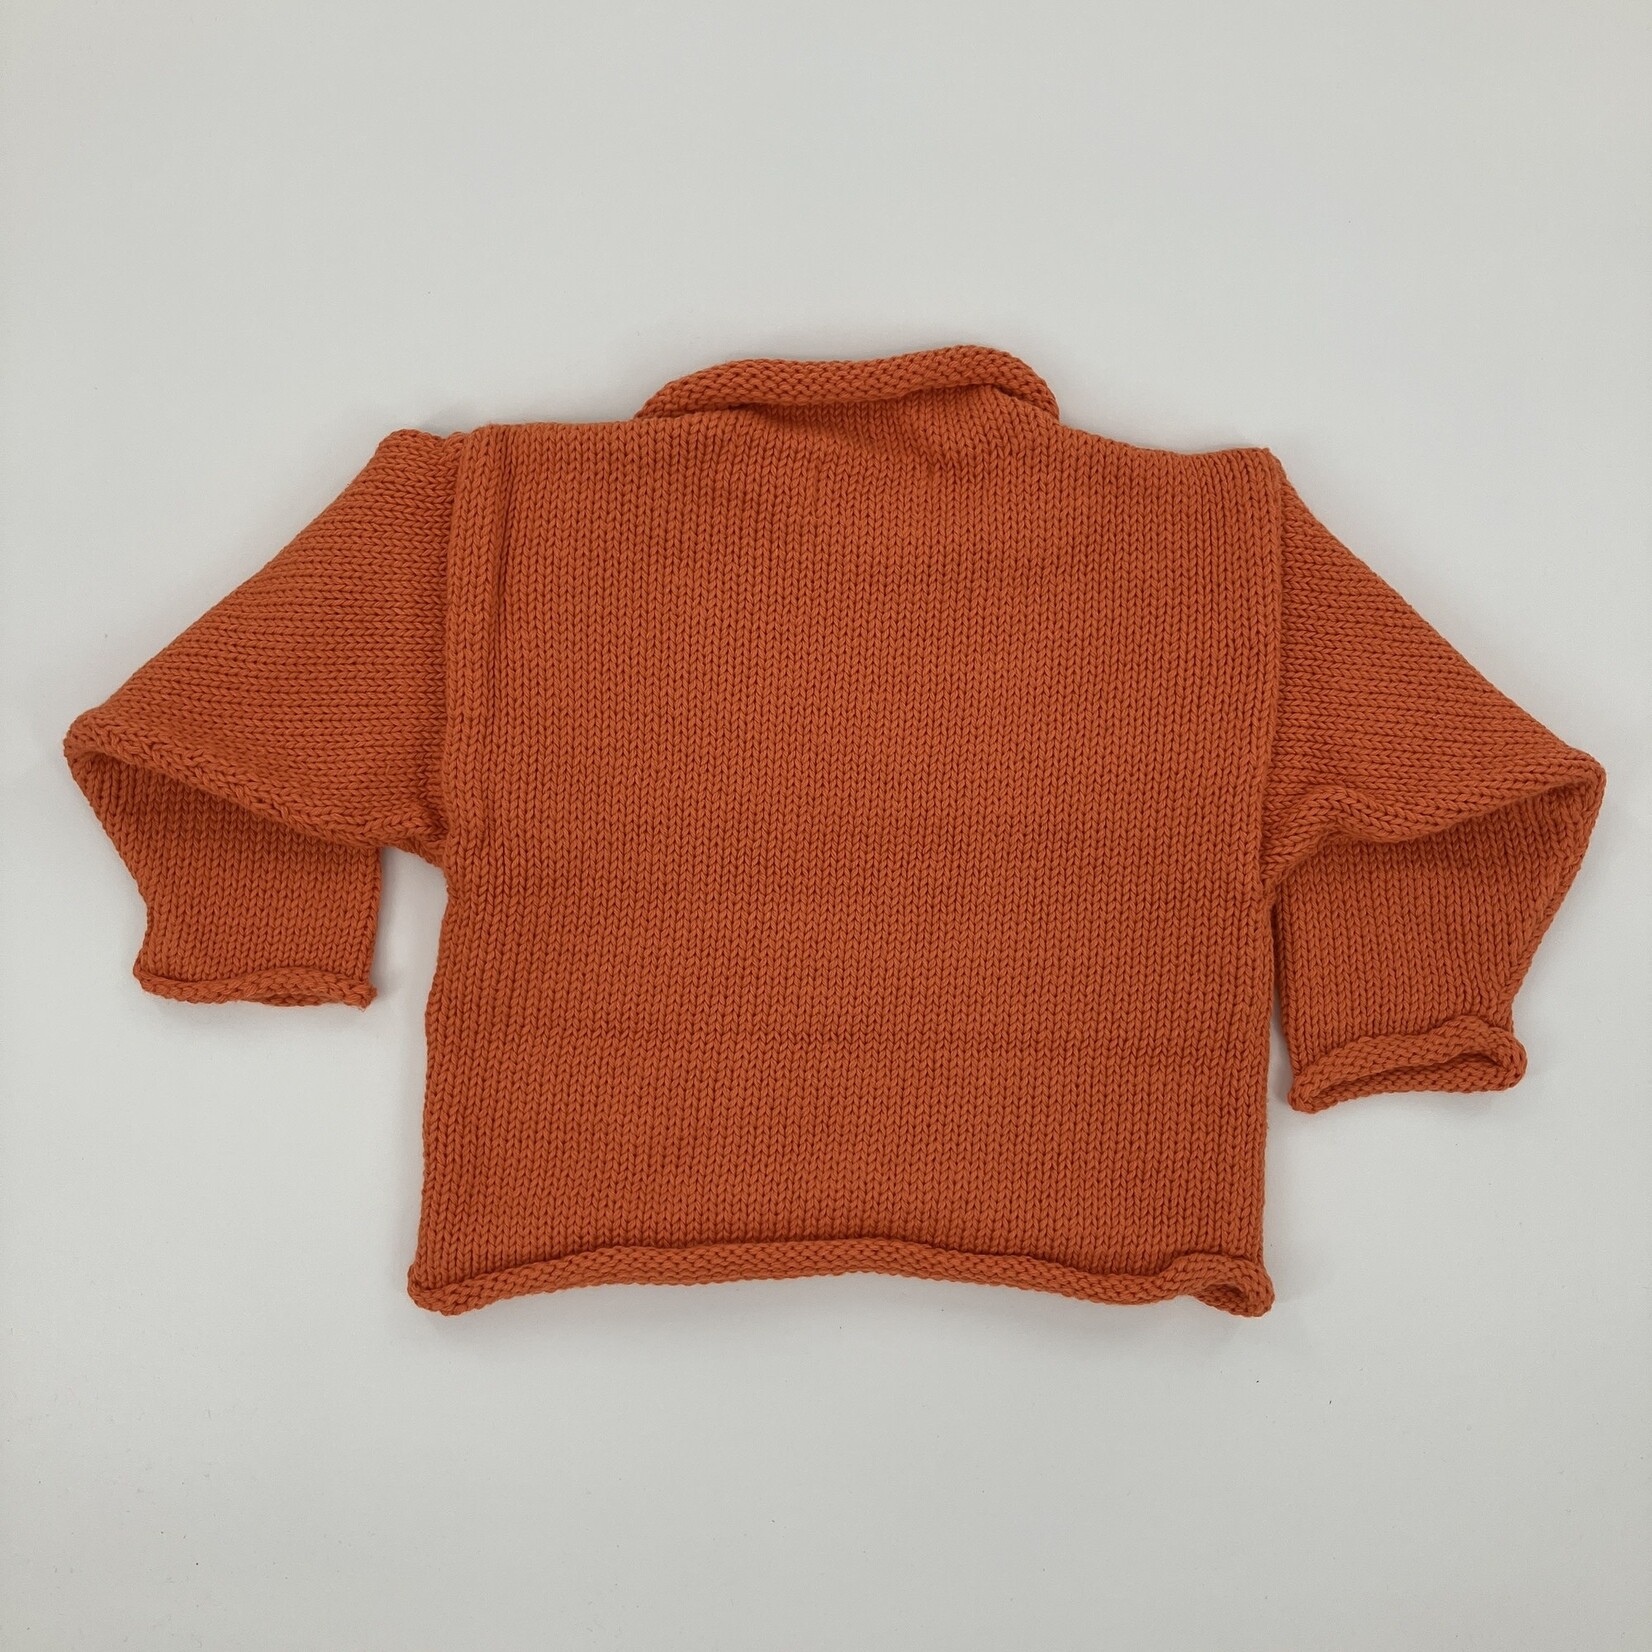 ACVISA/CLAVER Orange Sweater with White Star